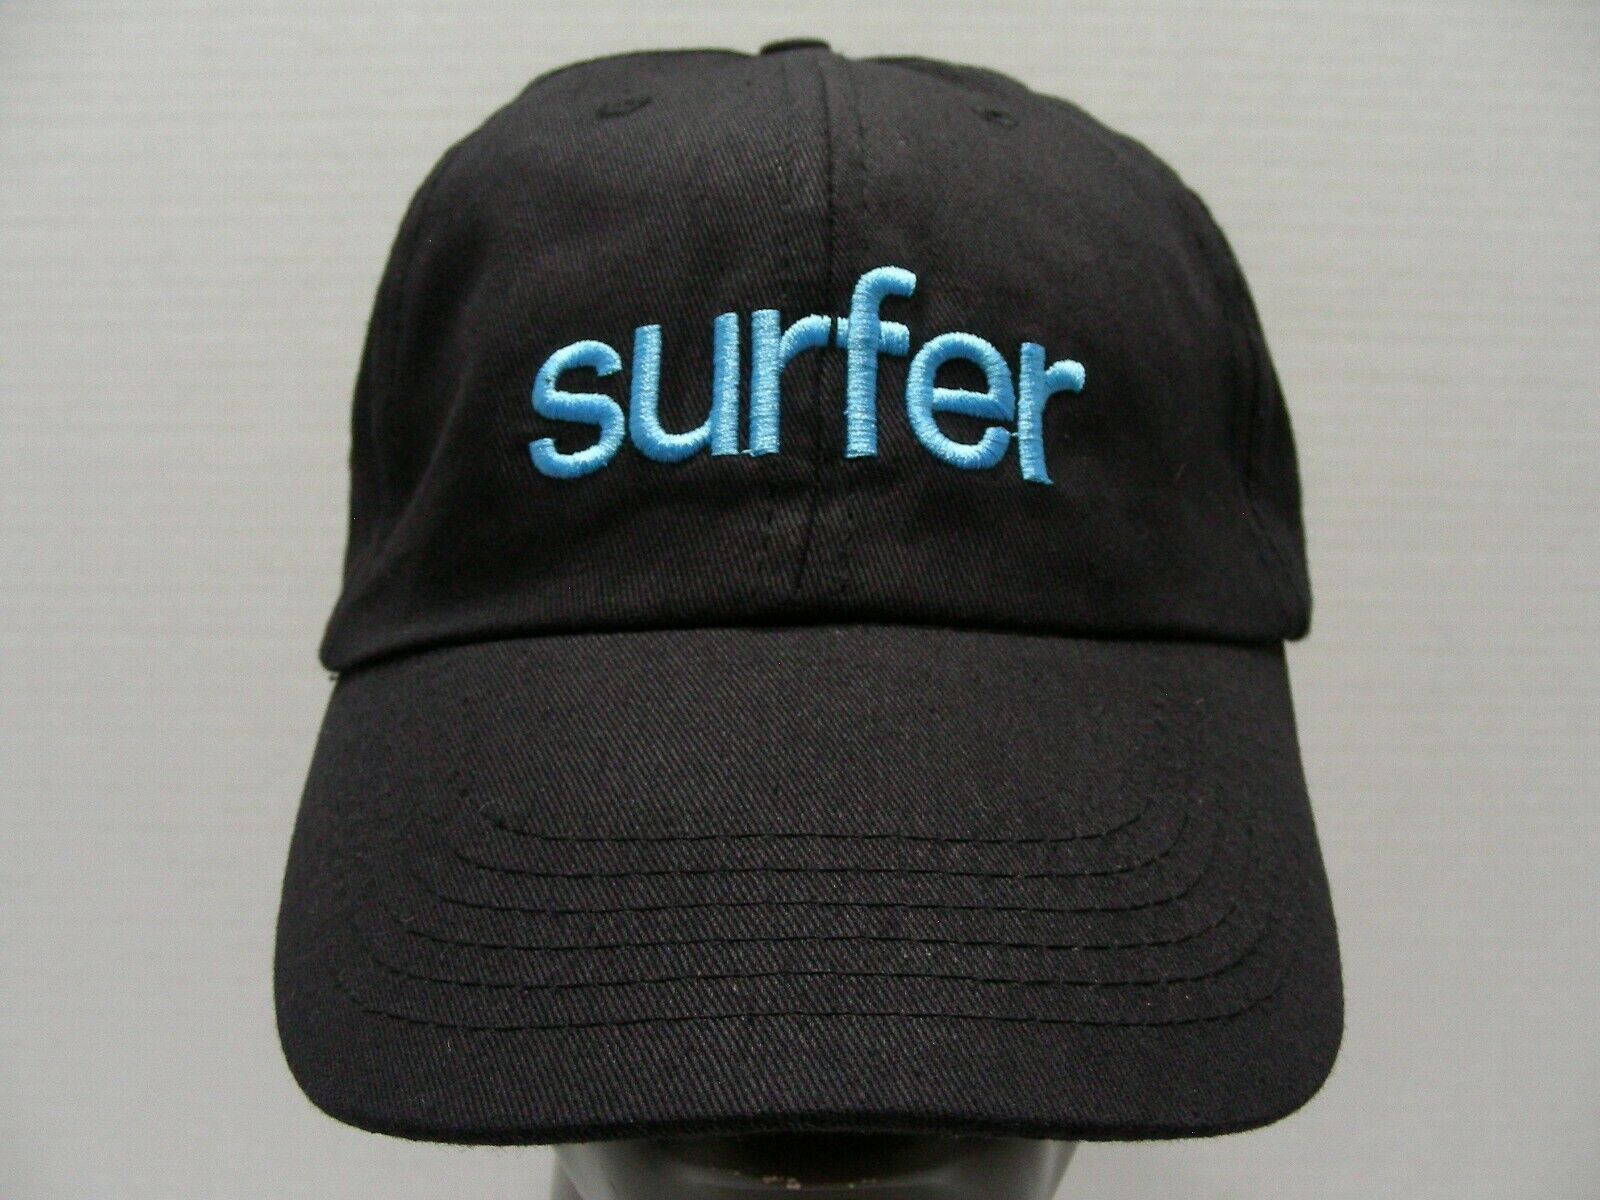 SURFER - One Size Lightweight Adjustable Baseball Cap Hat!